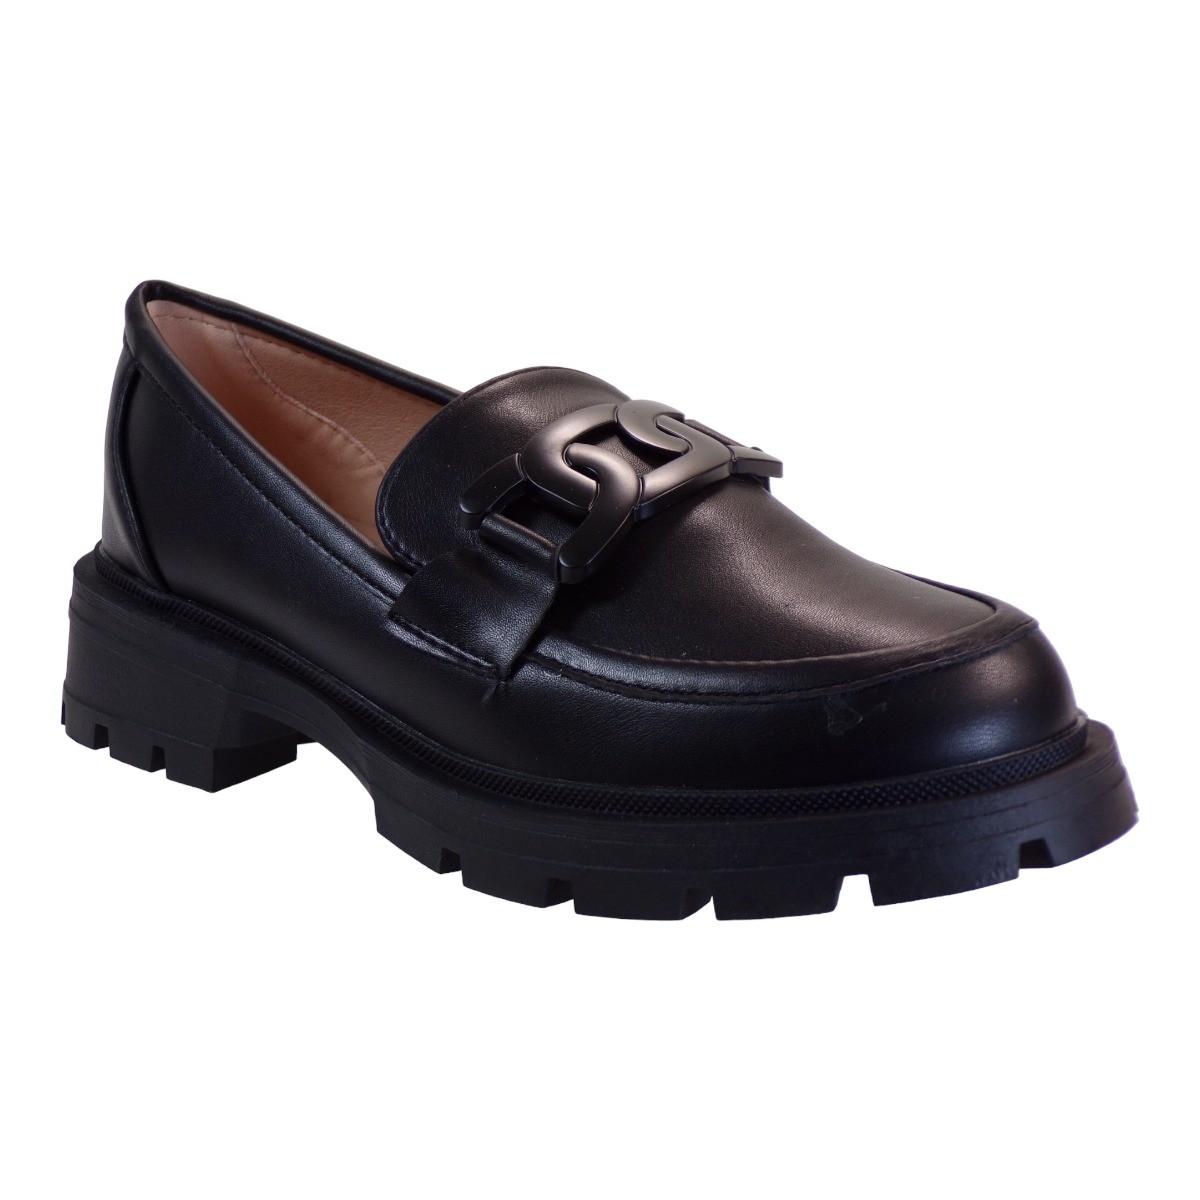 BAGIOTA Shoes Γυναικεία Παπούτσια Μοκασίνια W261 Μαύρο